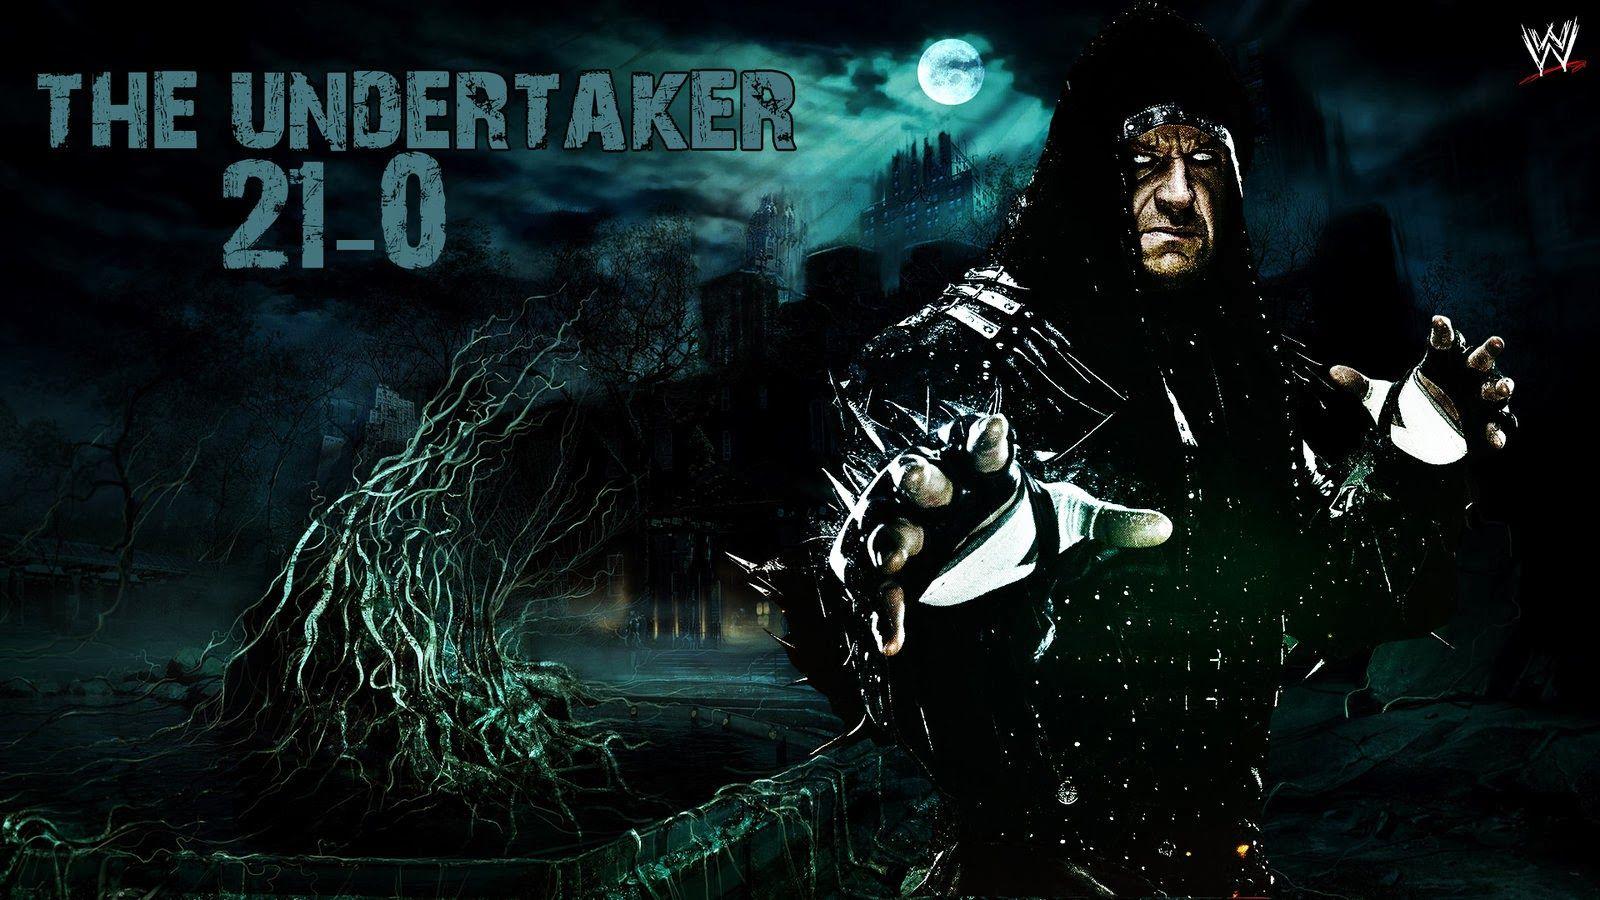 Computer Undertaker Wallpaper, Desktop Background 1600x900 px